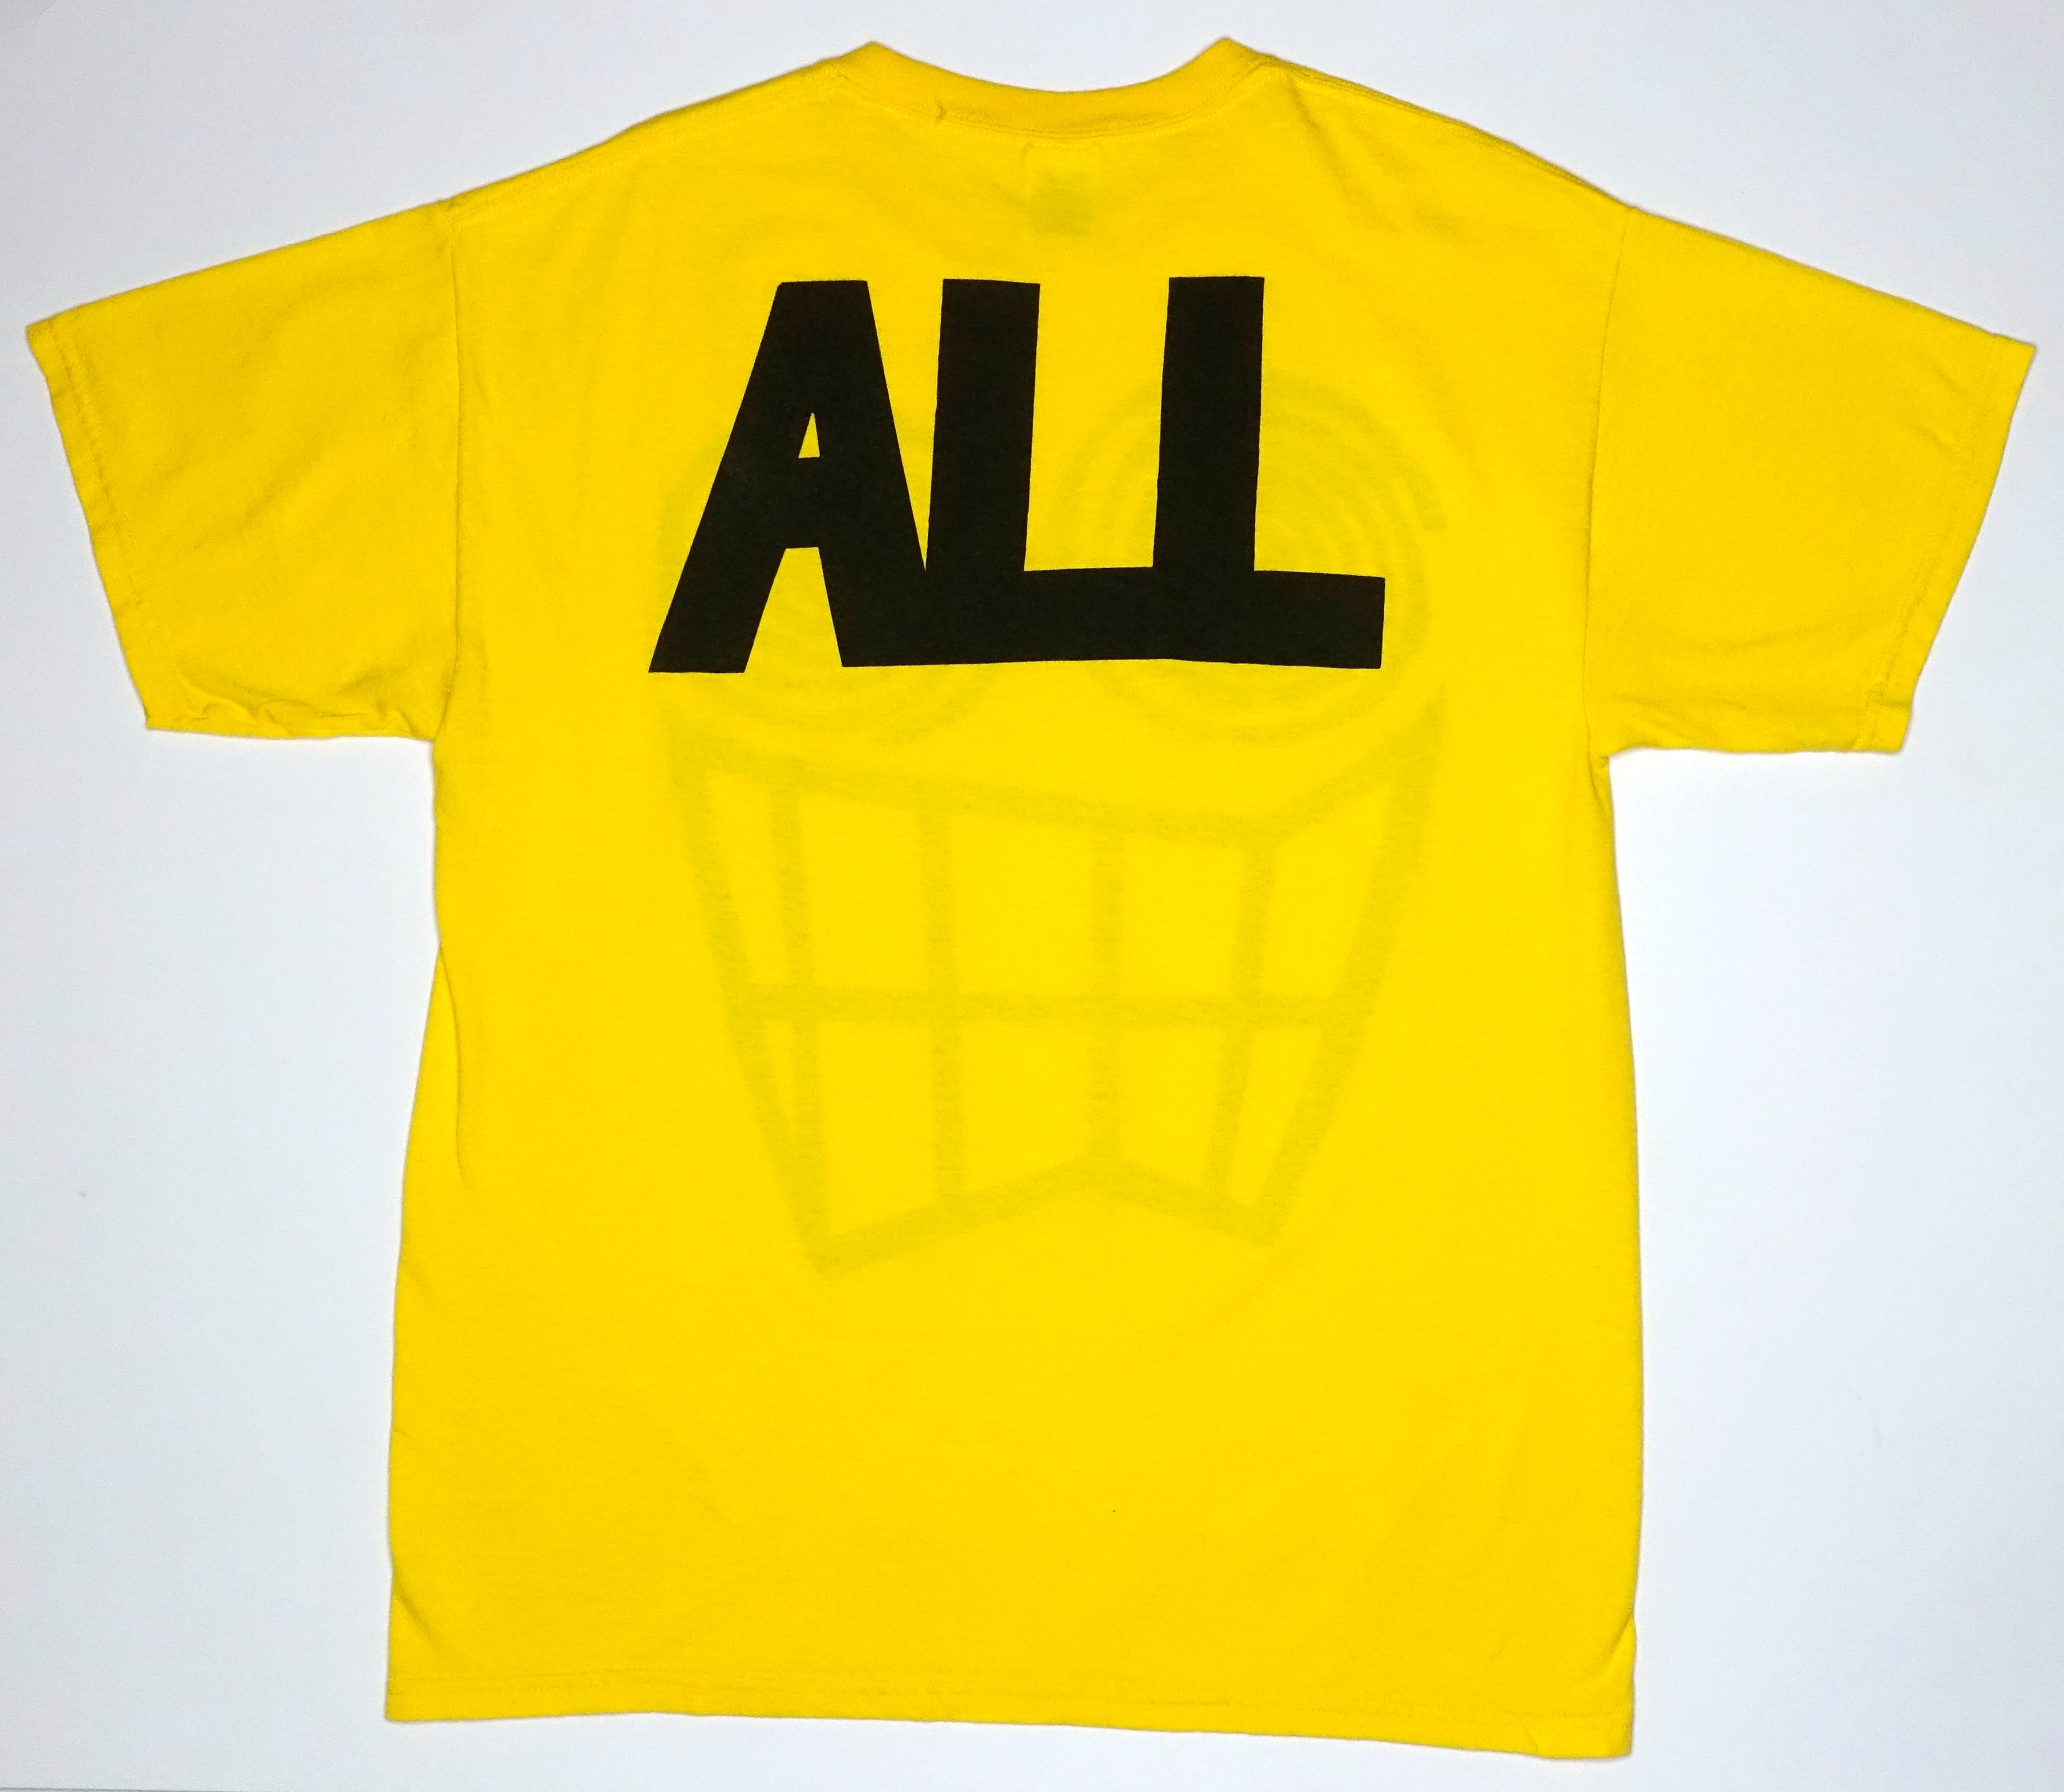 ALL - Allroy Face Tour Shirt Size Large